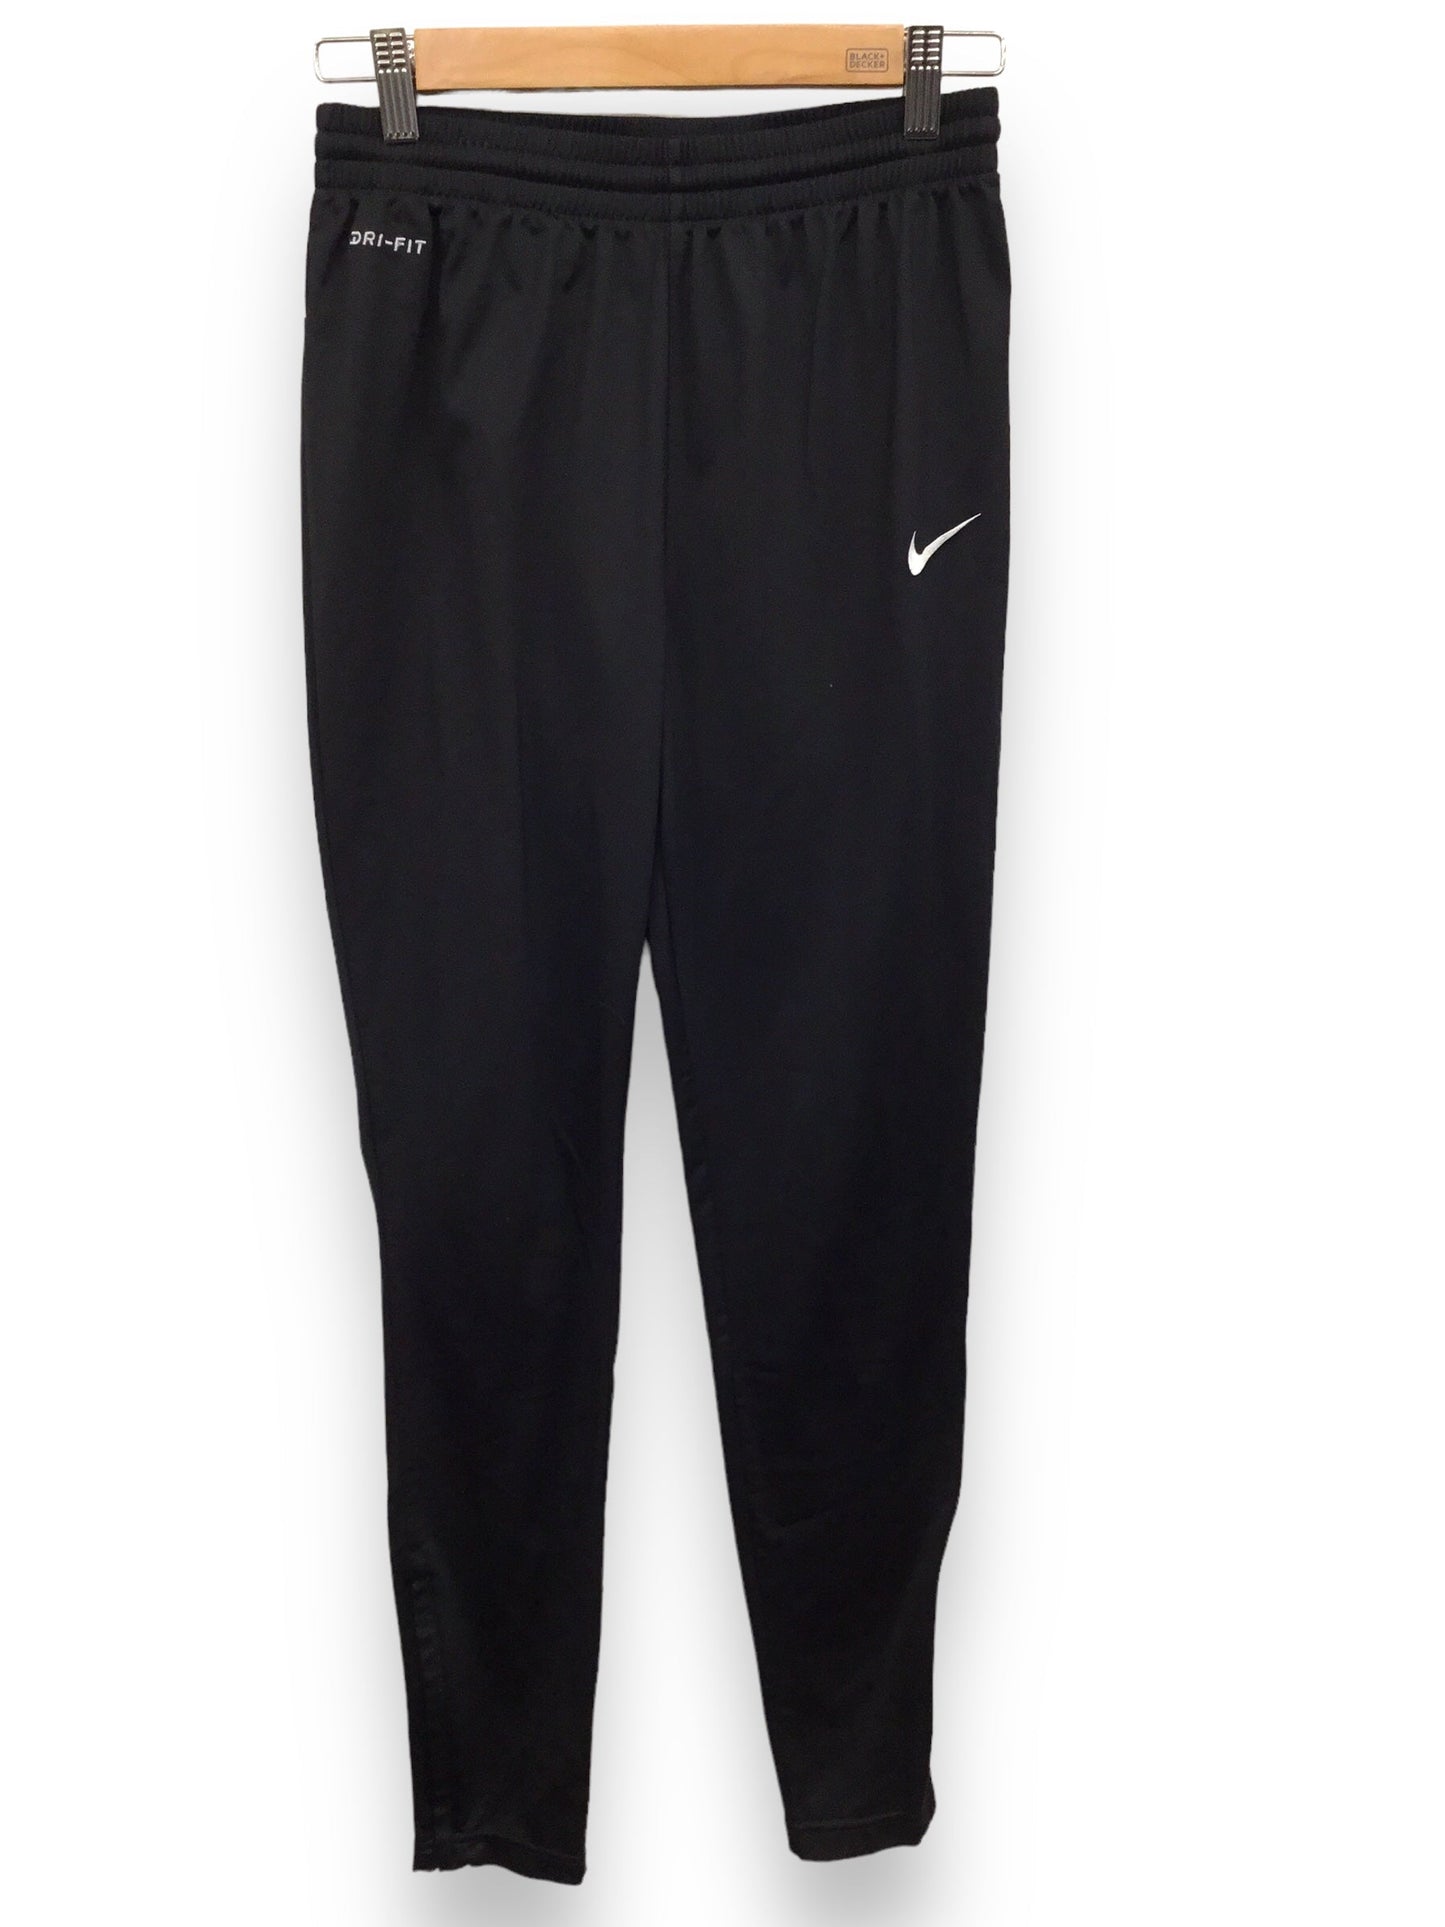 Black Athletic Pants Nike, Size S